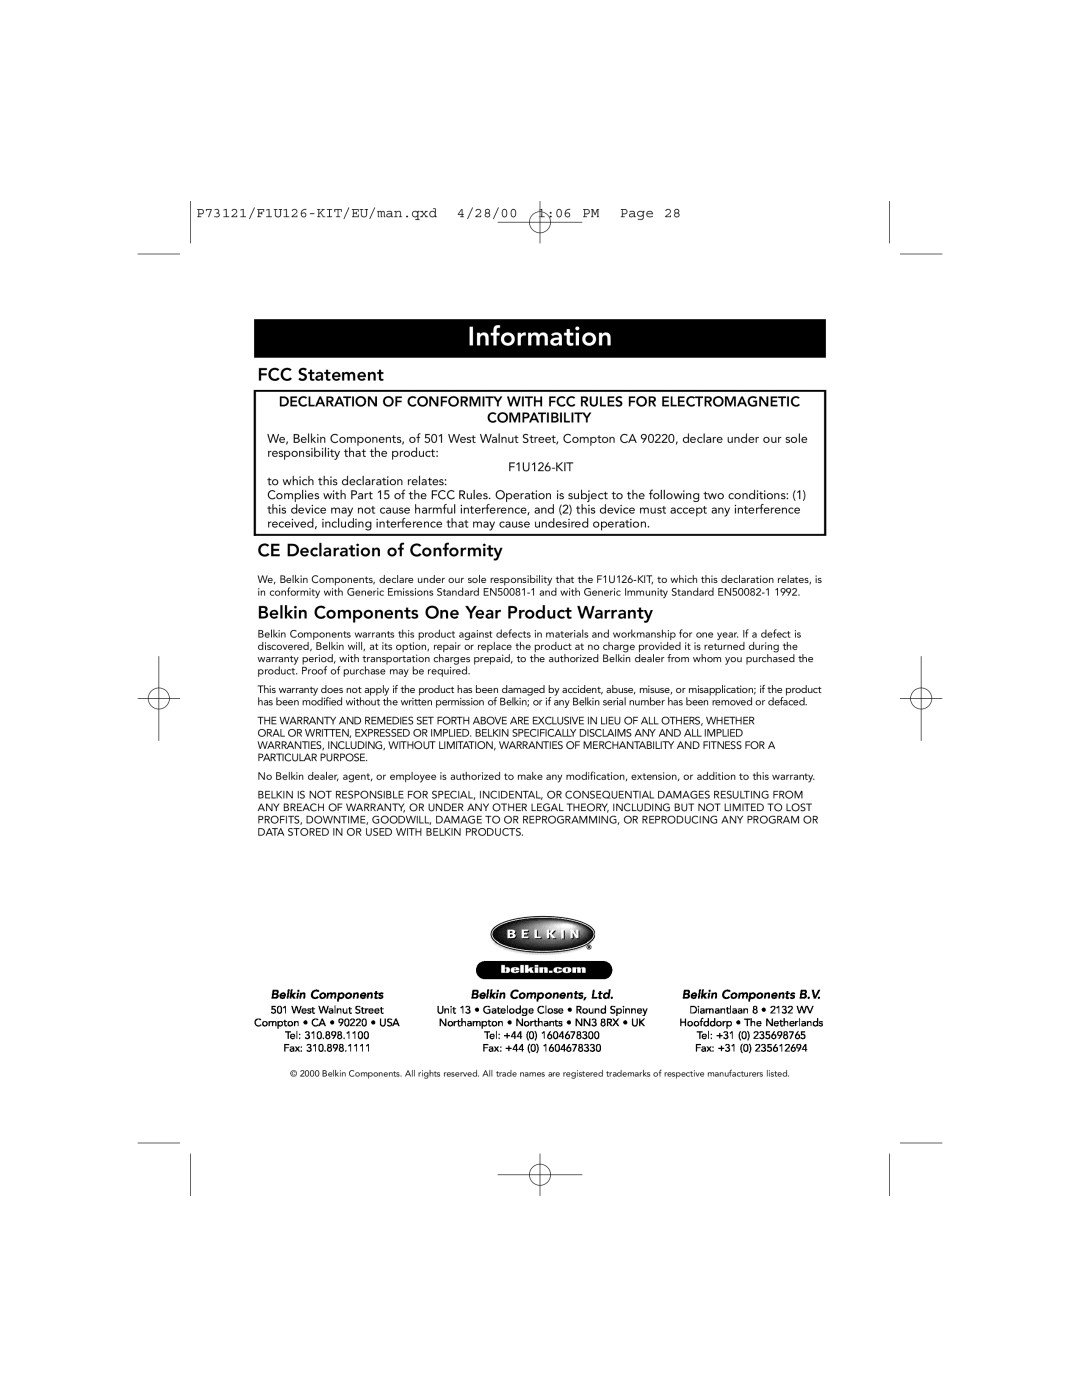 Belkin P73121 Information, FCC Statement, CE Declaration of Conformity, Belkin Components One Year Product Warranty 